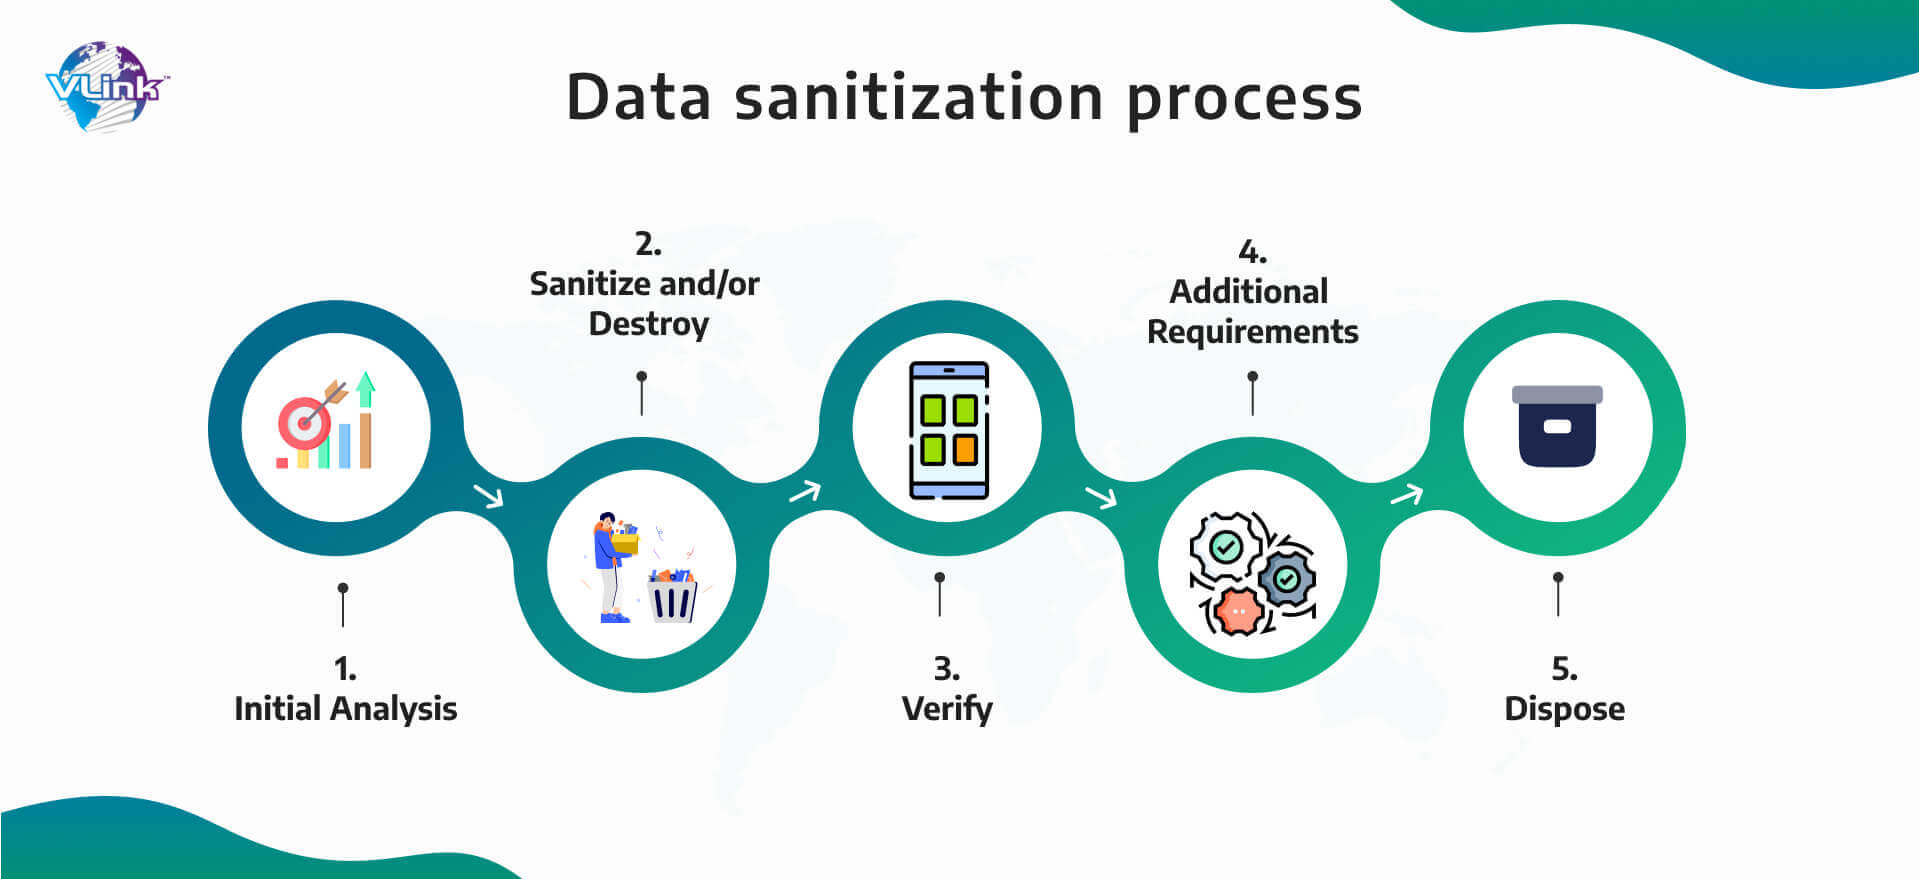 Data sanitization process